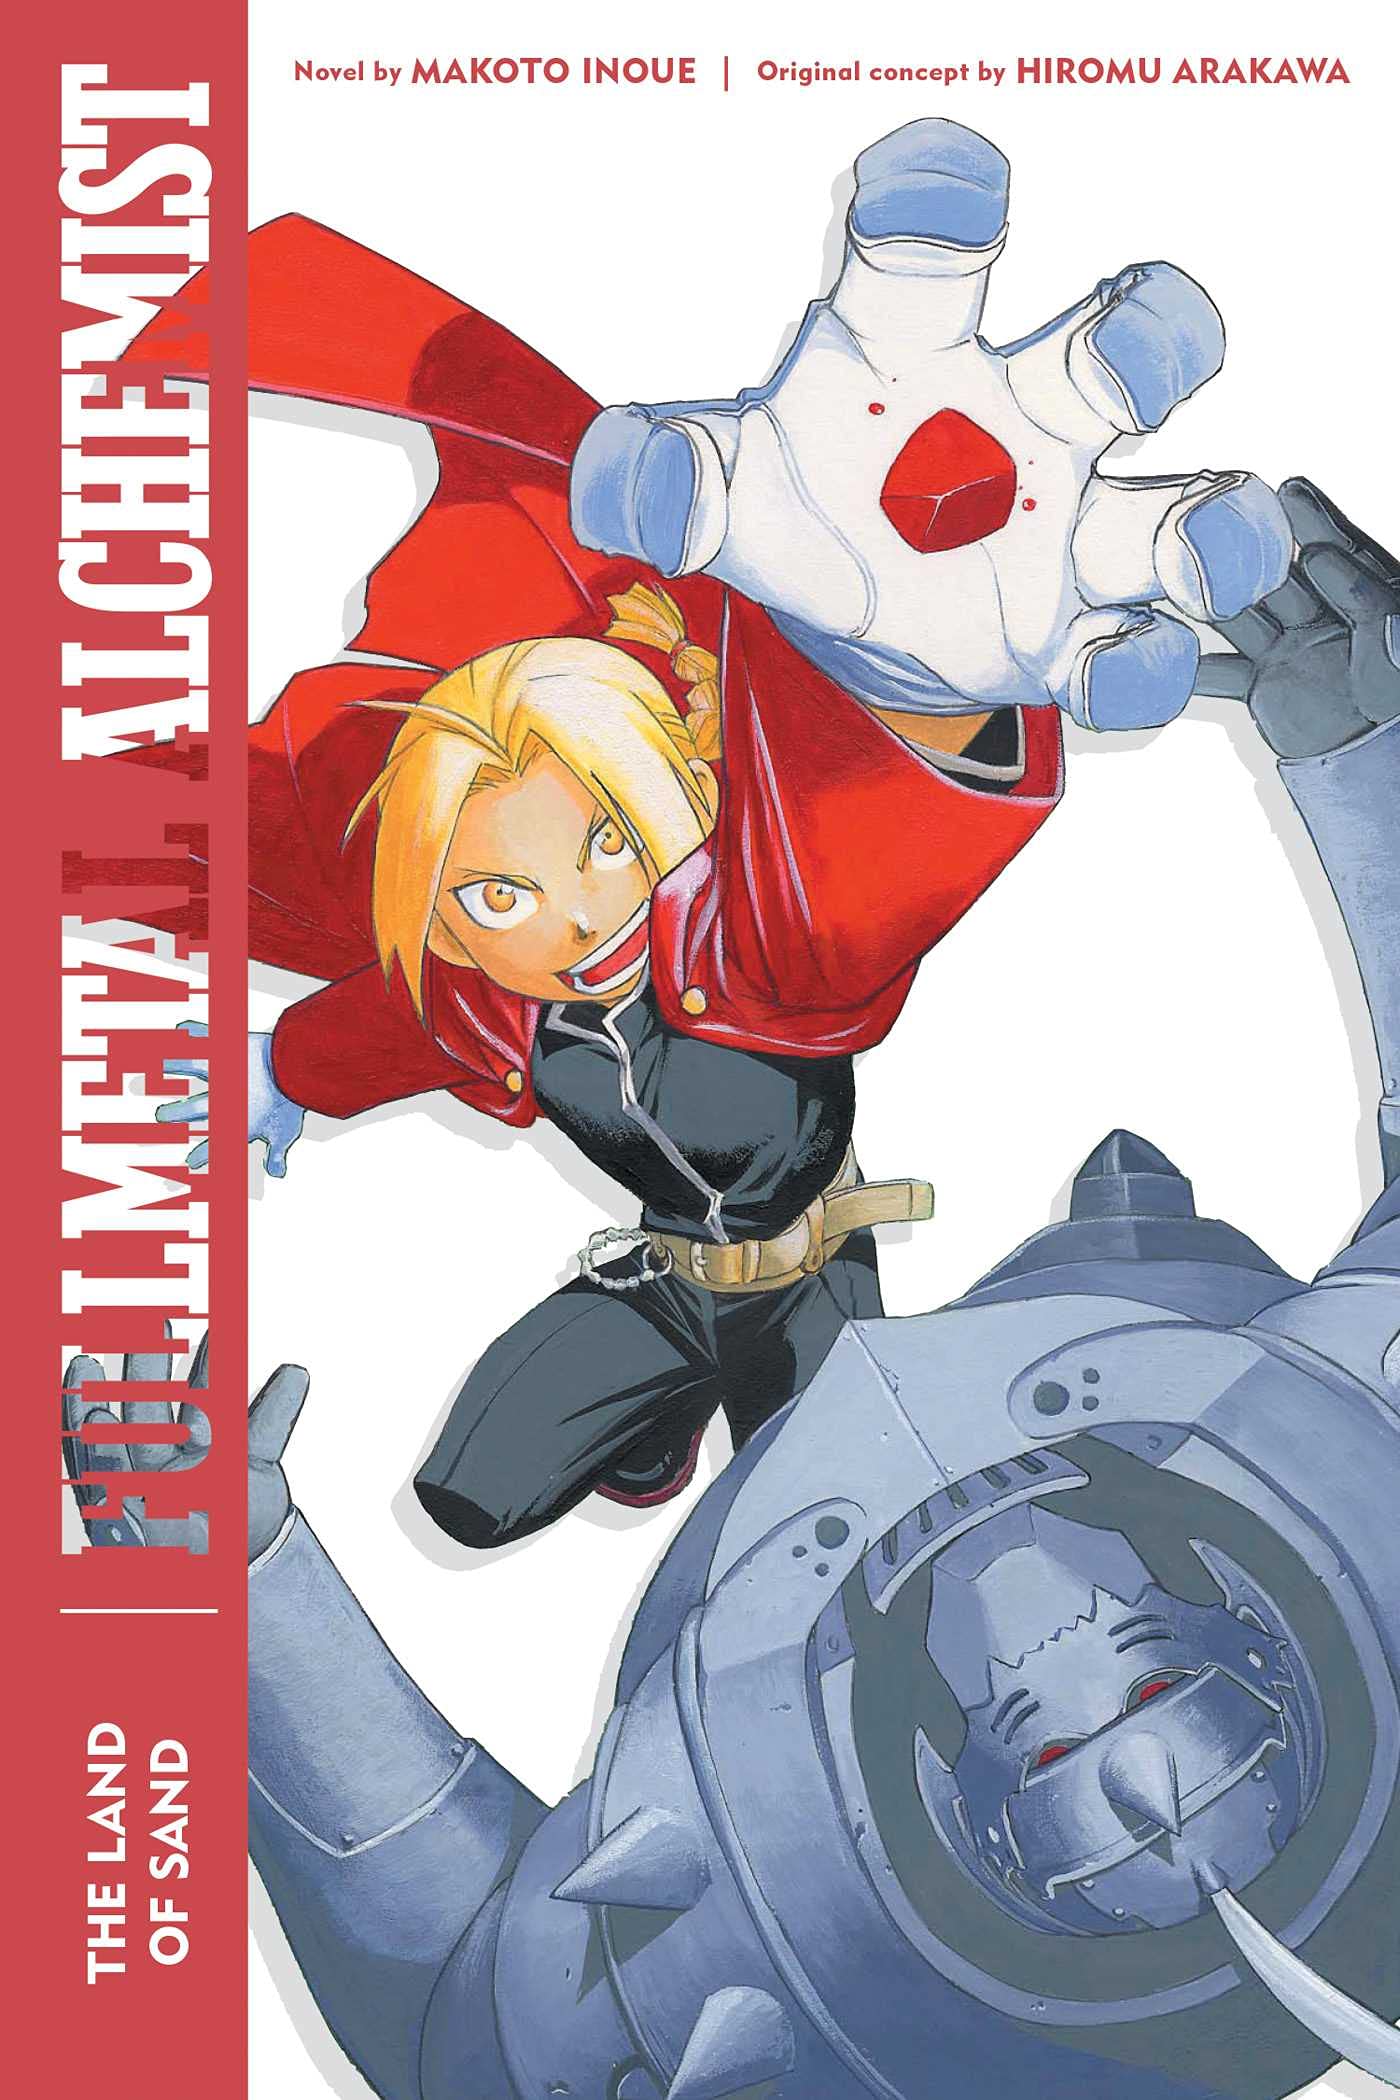 Fullmetal Alchemist Metal Edition, Band 01 - Leseprobe - Altraverse Manga